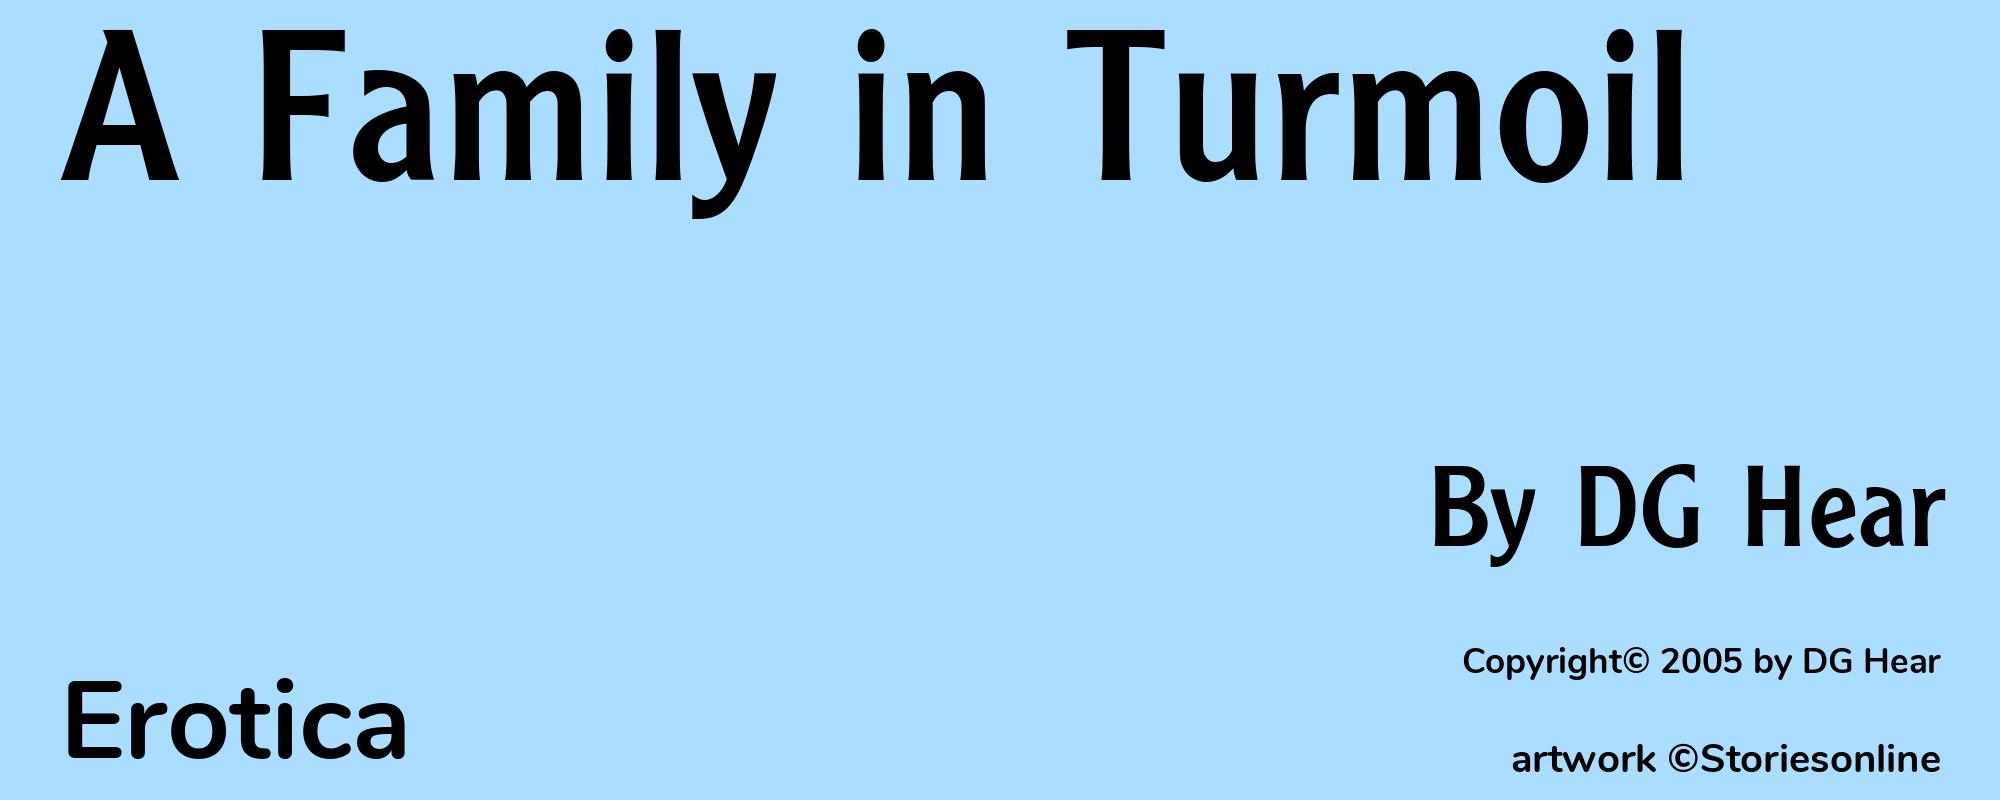 A Family in Turmoil - Cover